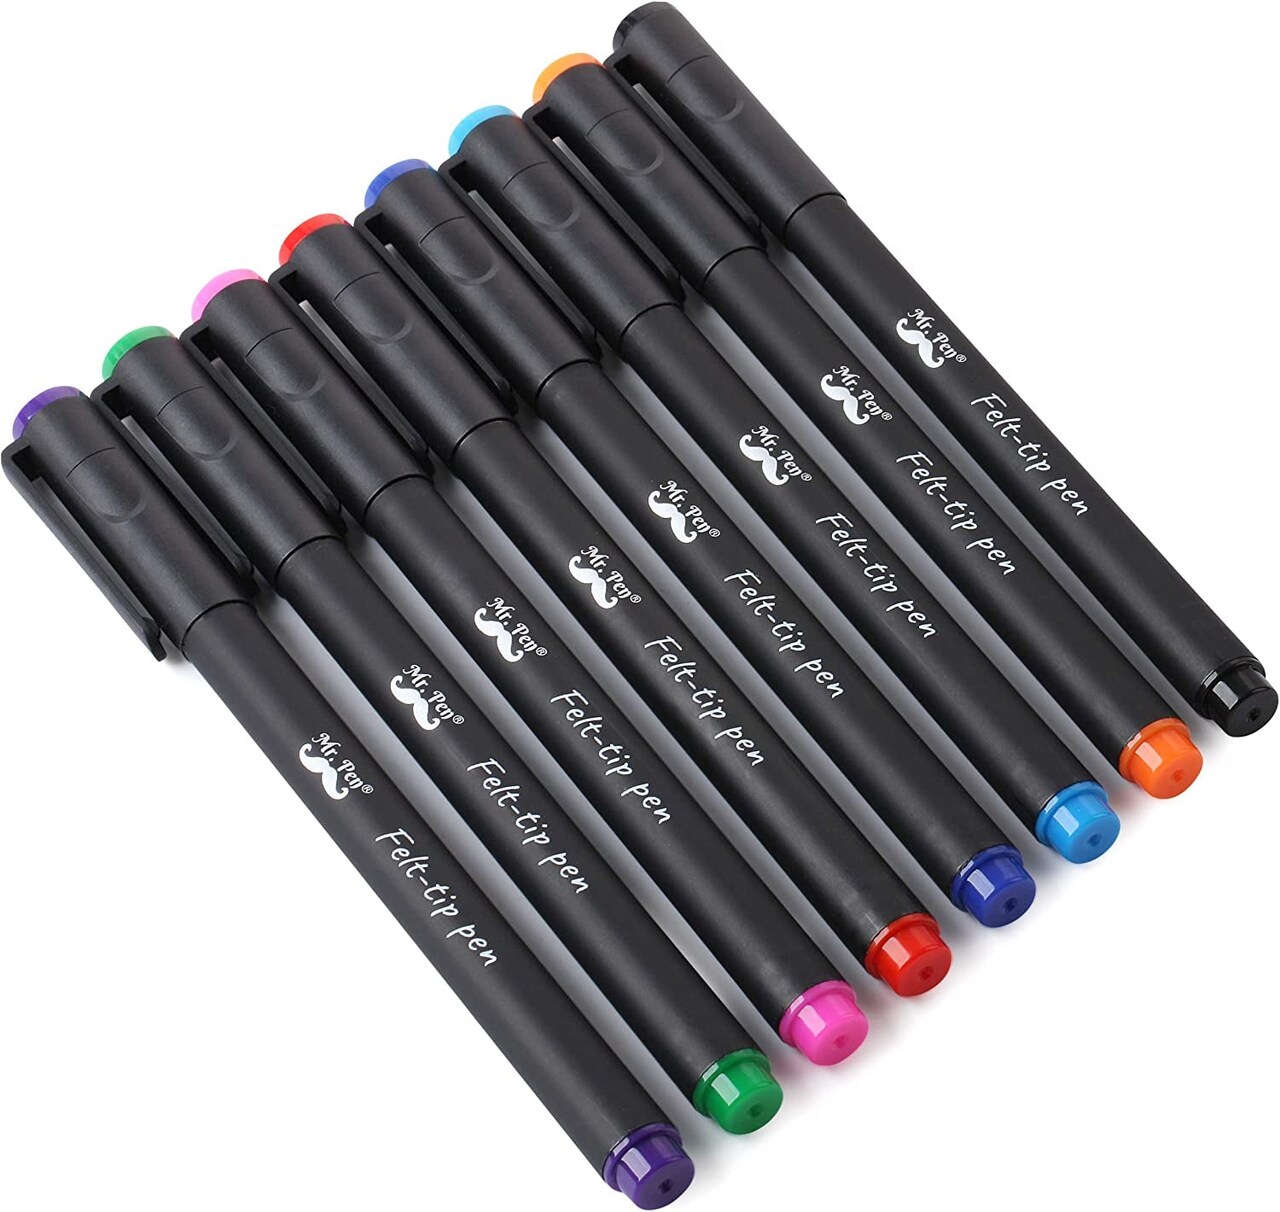 Felt Tip Pens, Pens Fine Point, Pack of 8, Fast Dry, No Smear, Colored Pens,  Journaling Pens, Felt Pens, Planner Markers, Planner Pens